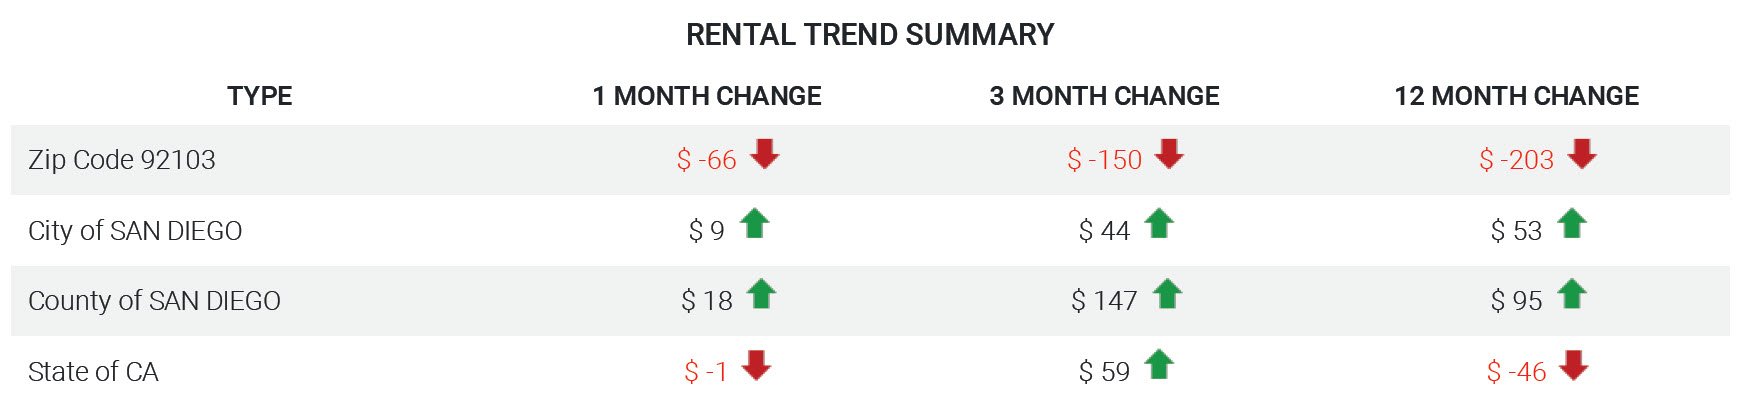 Rental Trend SD Summary